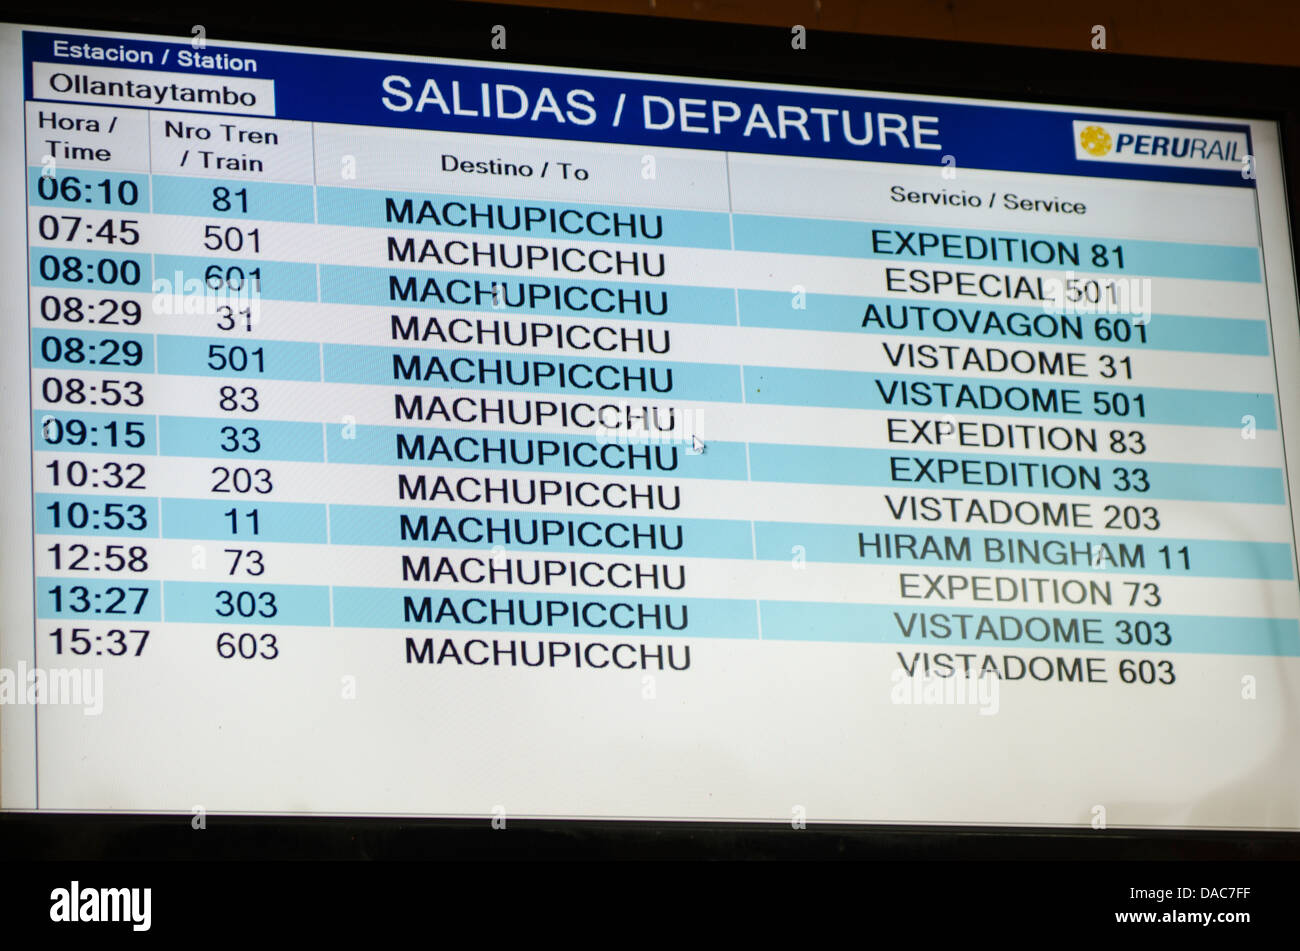 Train departure arrival board screen sign at the Ollantaytambo Train station in Ollantaytambo, Sacred Valley, Peru. Stock Photo